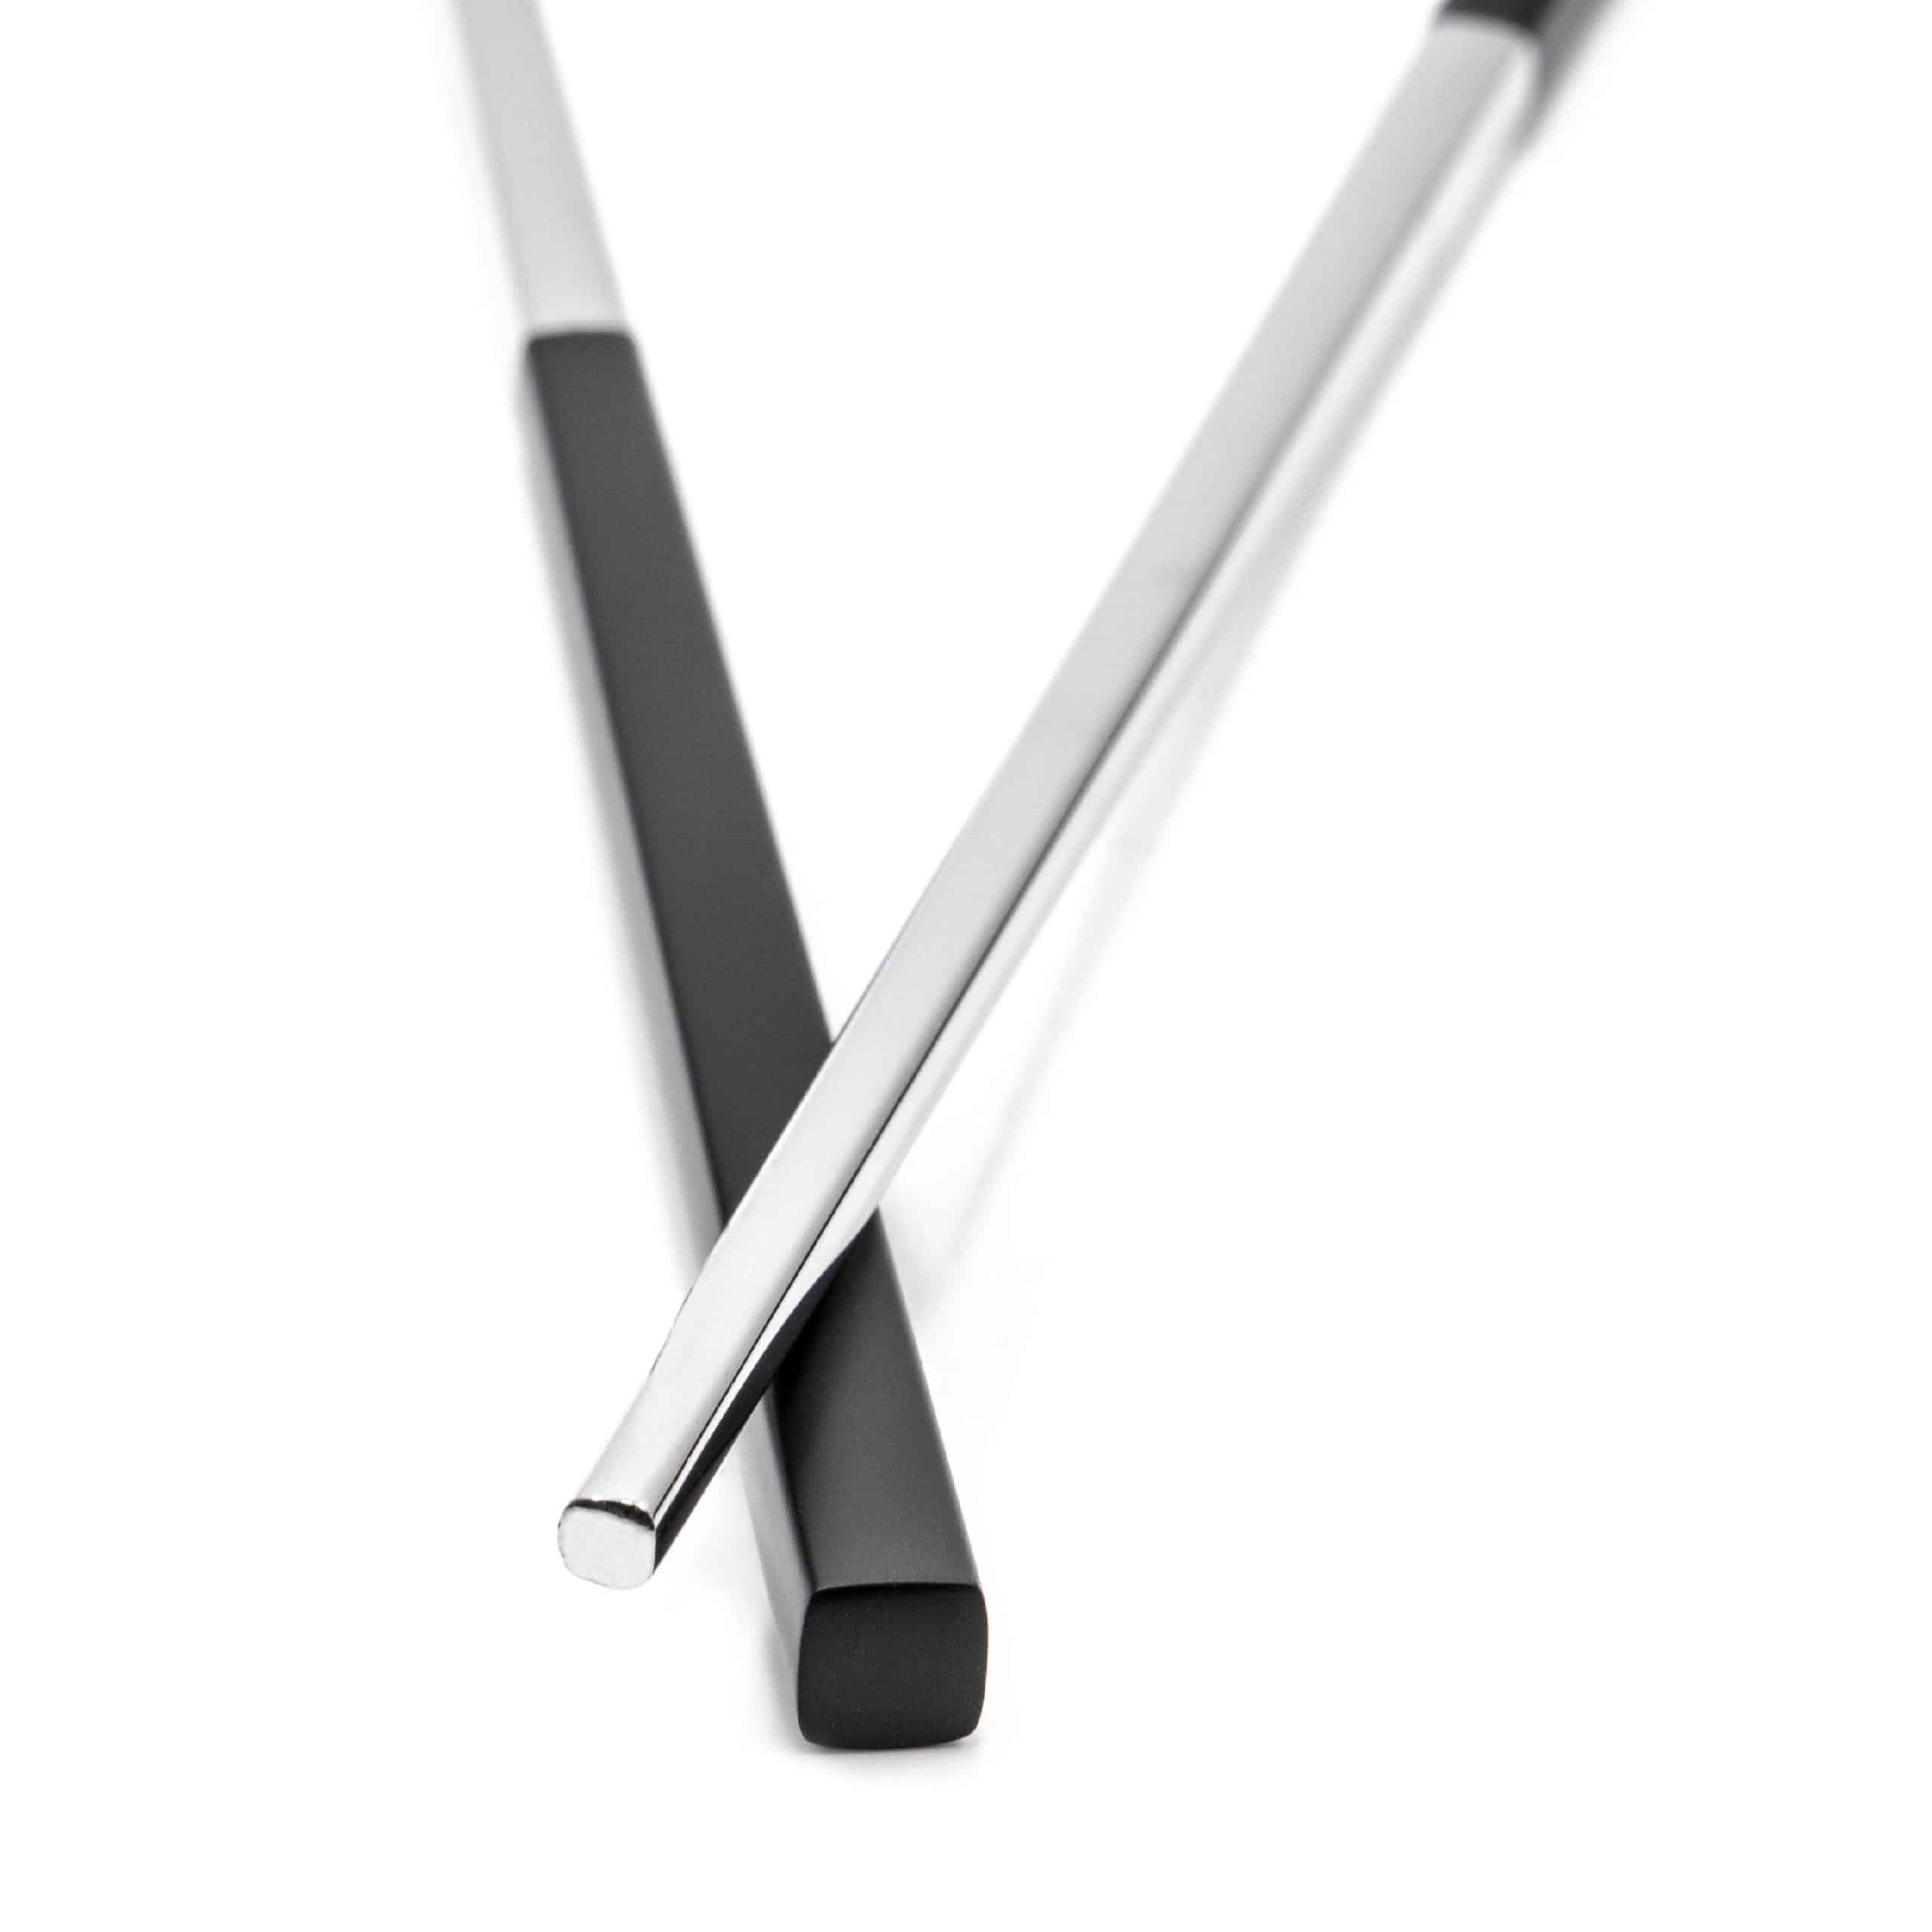 Chopstick Set (1 Pair) - Stainless Steel, black, silver, 23 cm long, Reusable